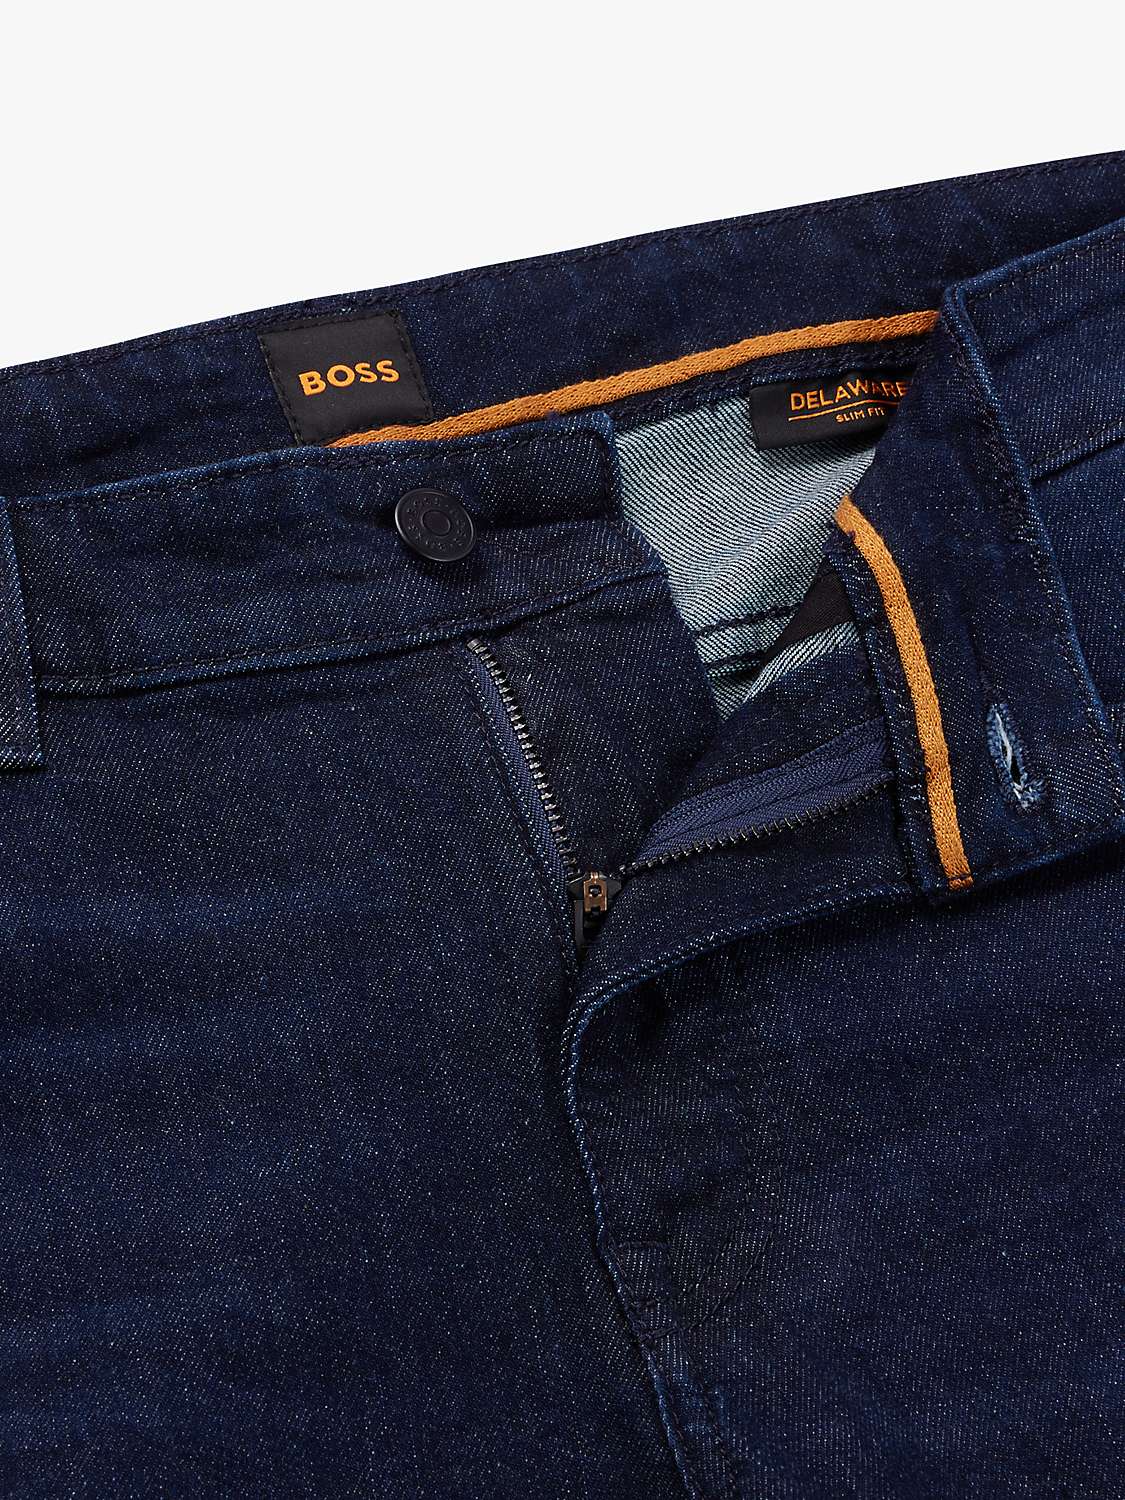 HUGO BOSS Delaware Jeans, Dark Blue at John Lewis & Partners